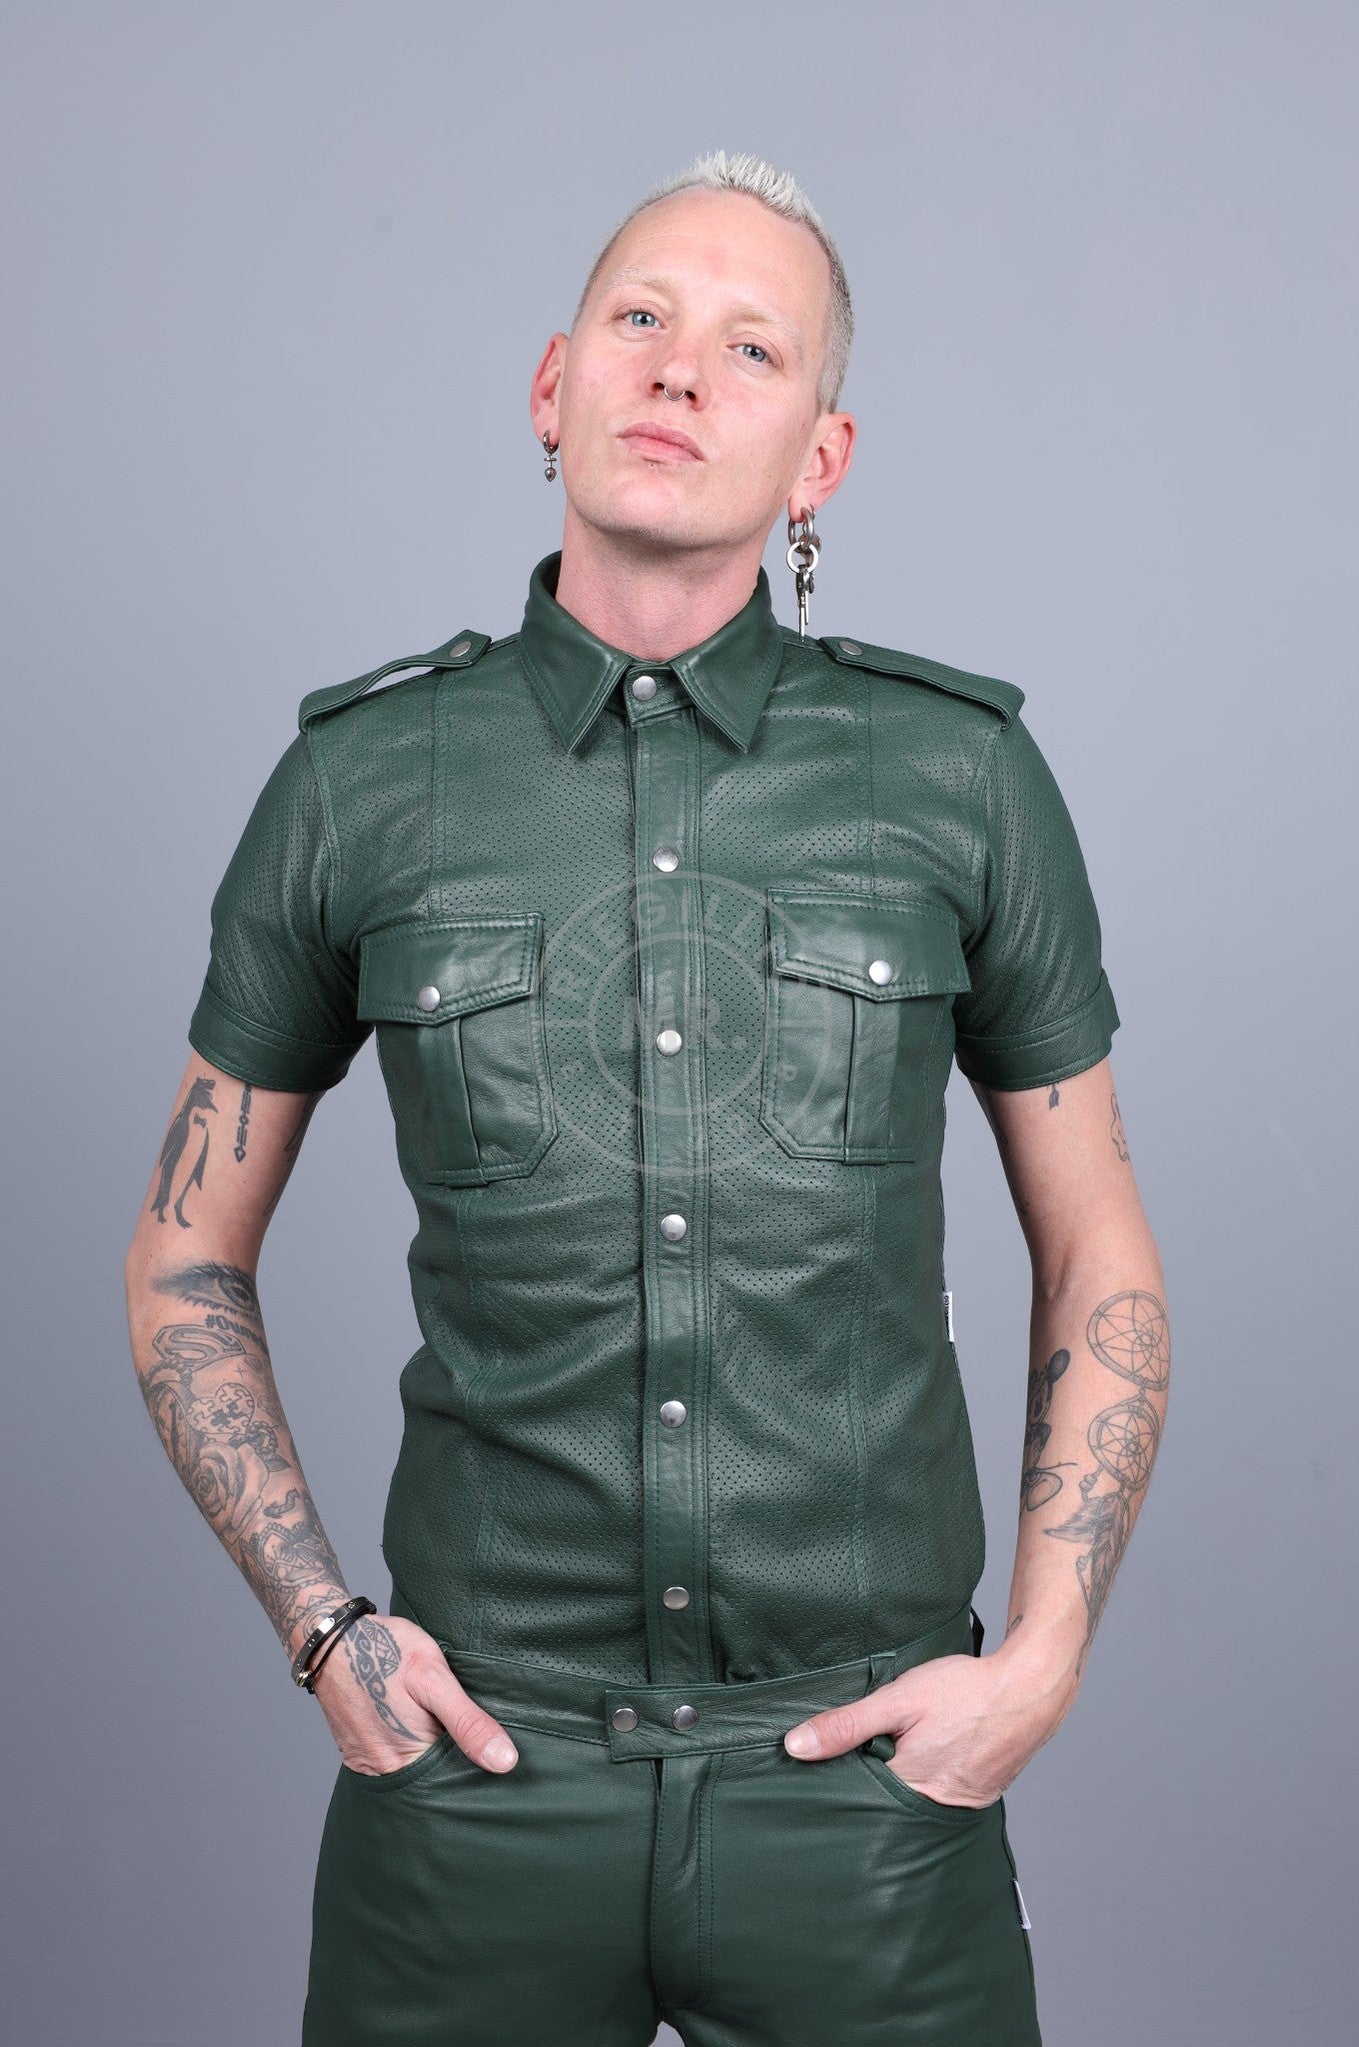 Dark Green Leather Perforated Shirt at MR. Riegillio